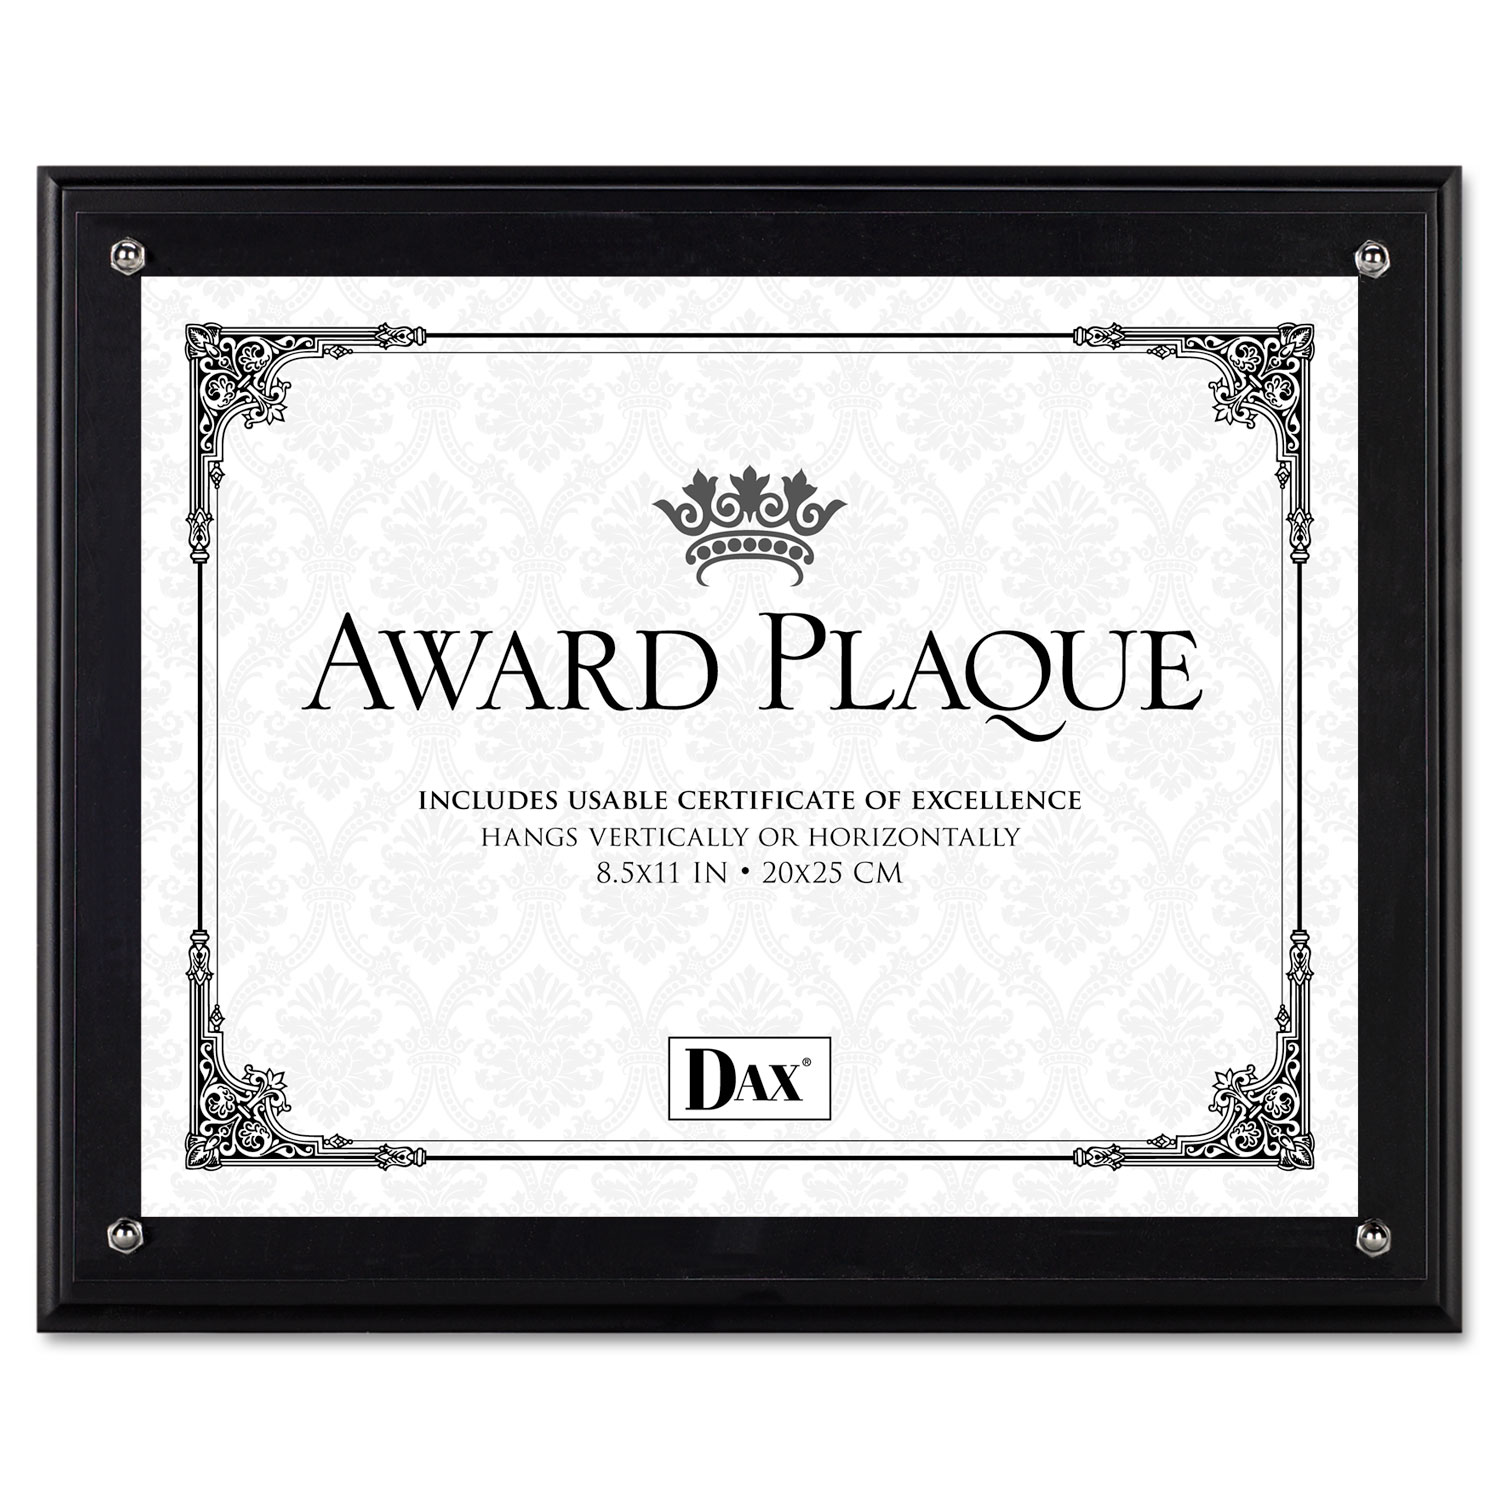  DAX N15908NT Award Plaque, Wood/Acrylic Frame, Up to 8 1/2 x 11, Black (DAXN15908NT) 